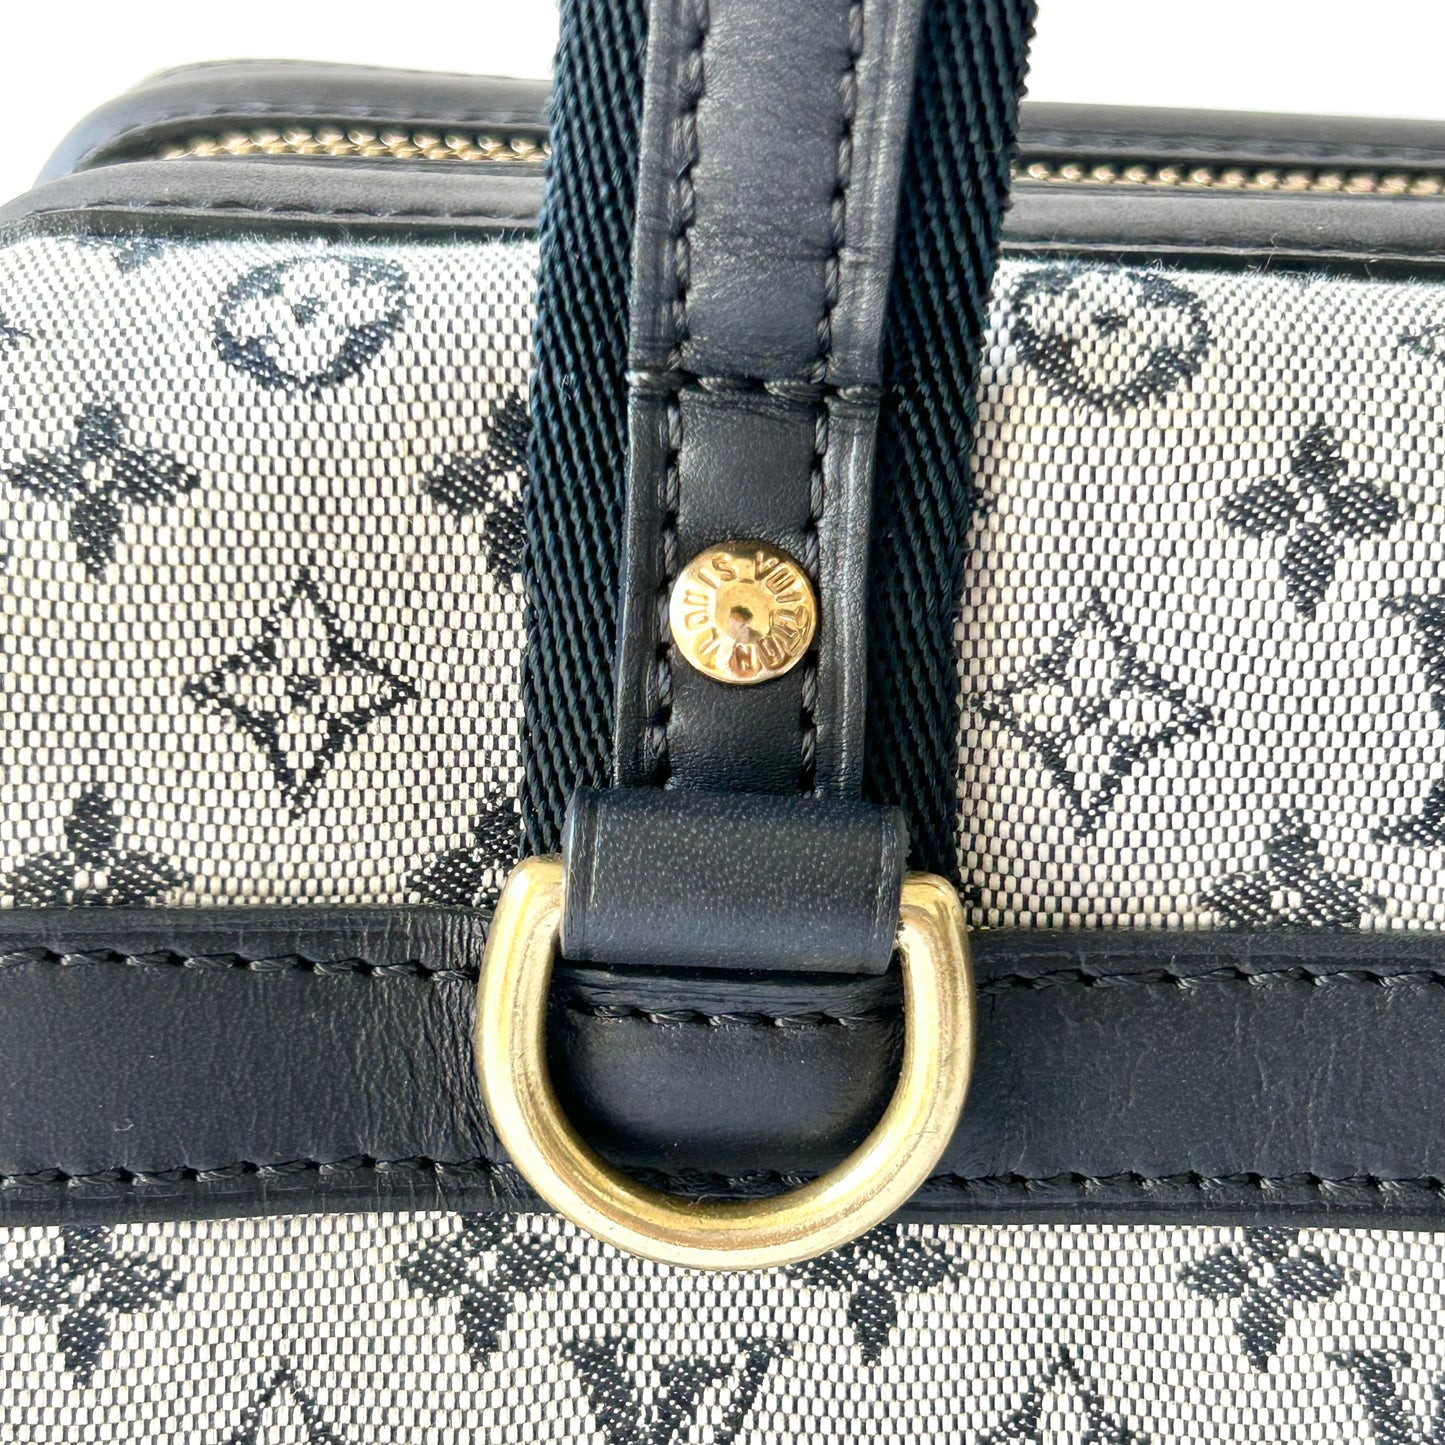 Louis Vuitton Authentic Mini Lin Josephine Boston Tote Burgundy Bag